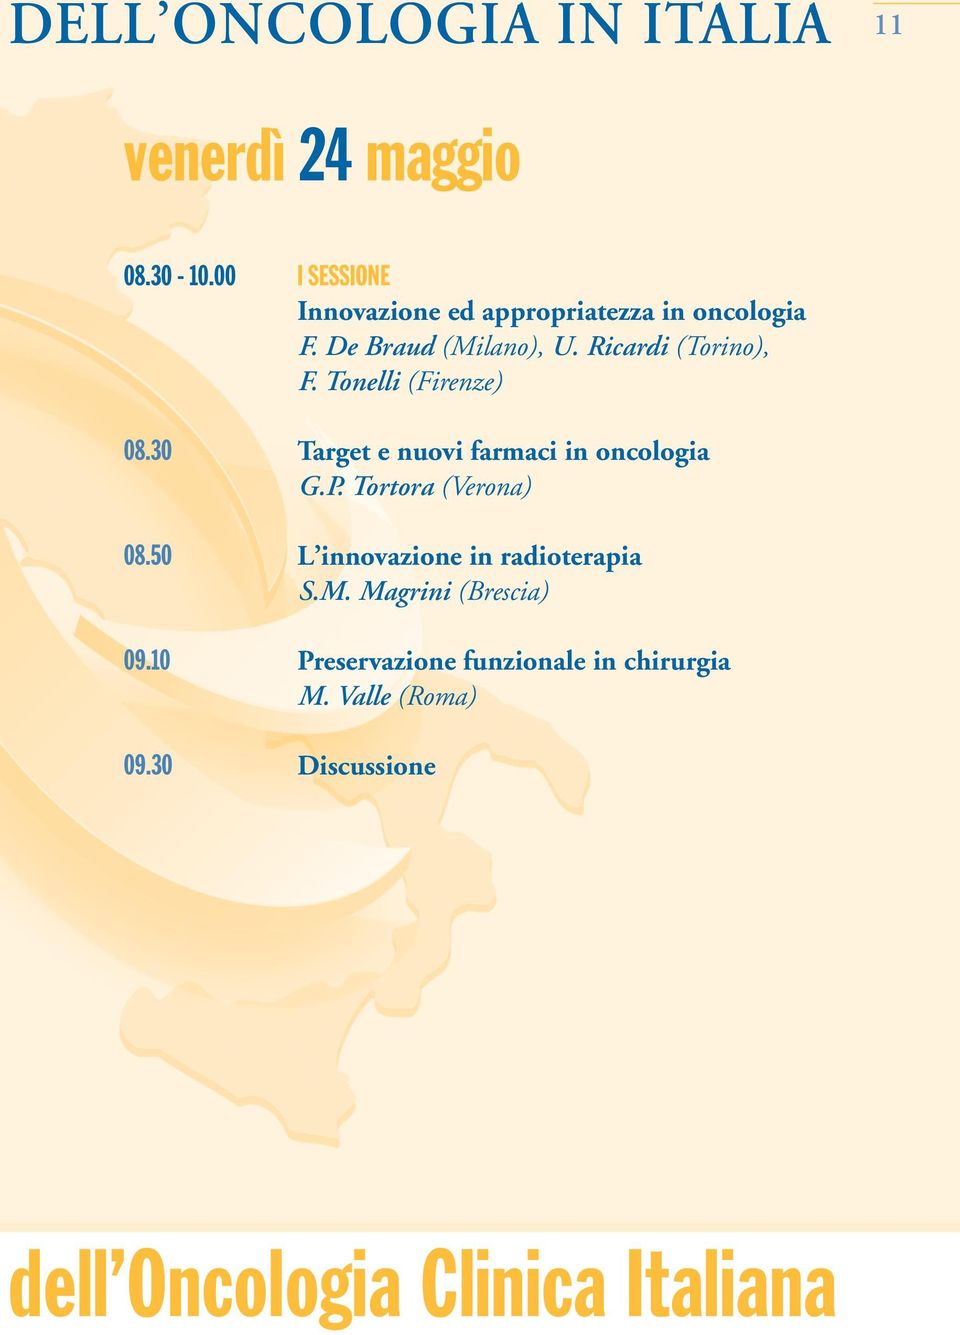 Tonelli (Firenze) 08.30 Target e nuovi farmaci in oncologia G.P. Tortora (Verona) 08.